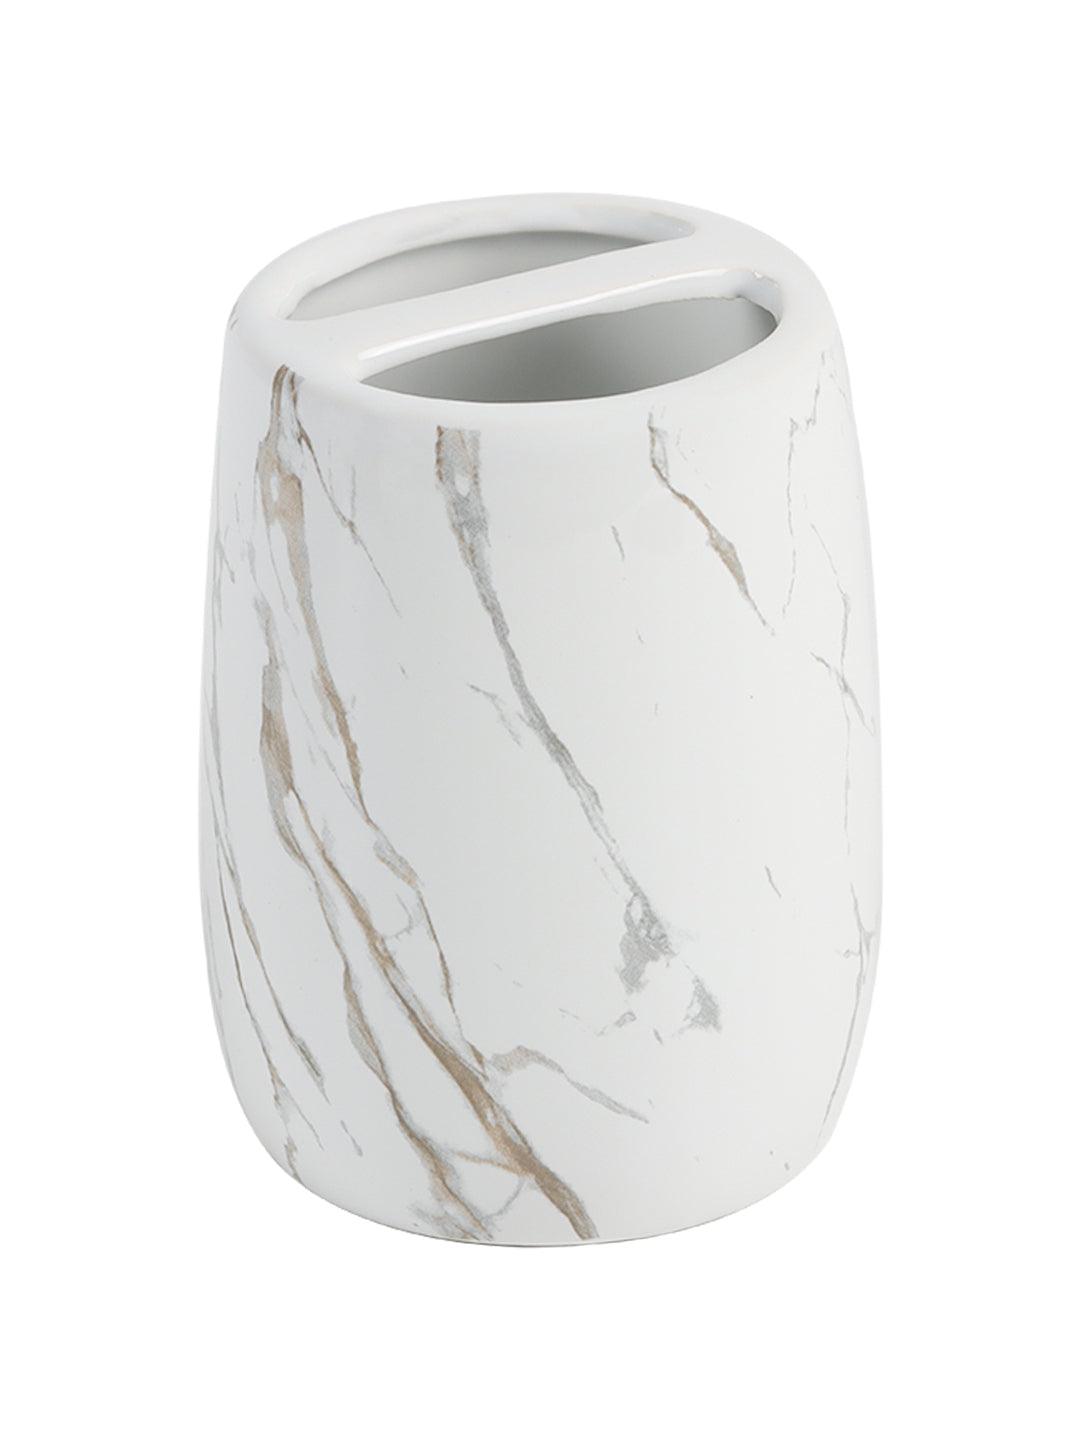 White Ceramic Bathroom Set Of 4 - Stone Finish, Bath Accessories - MARKET99